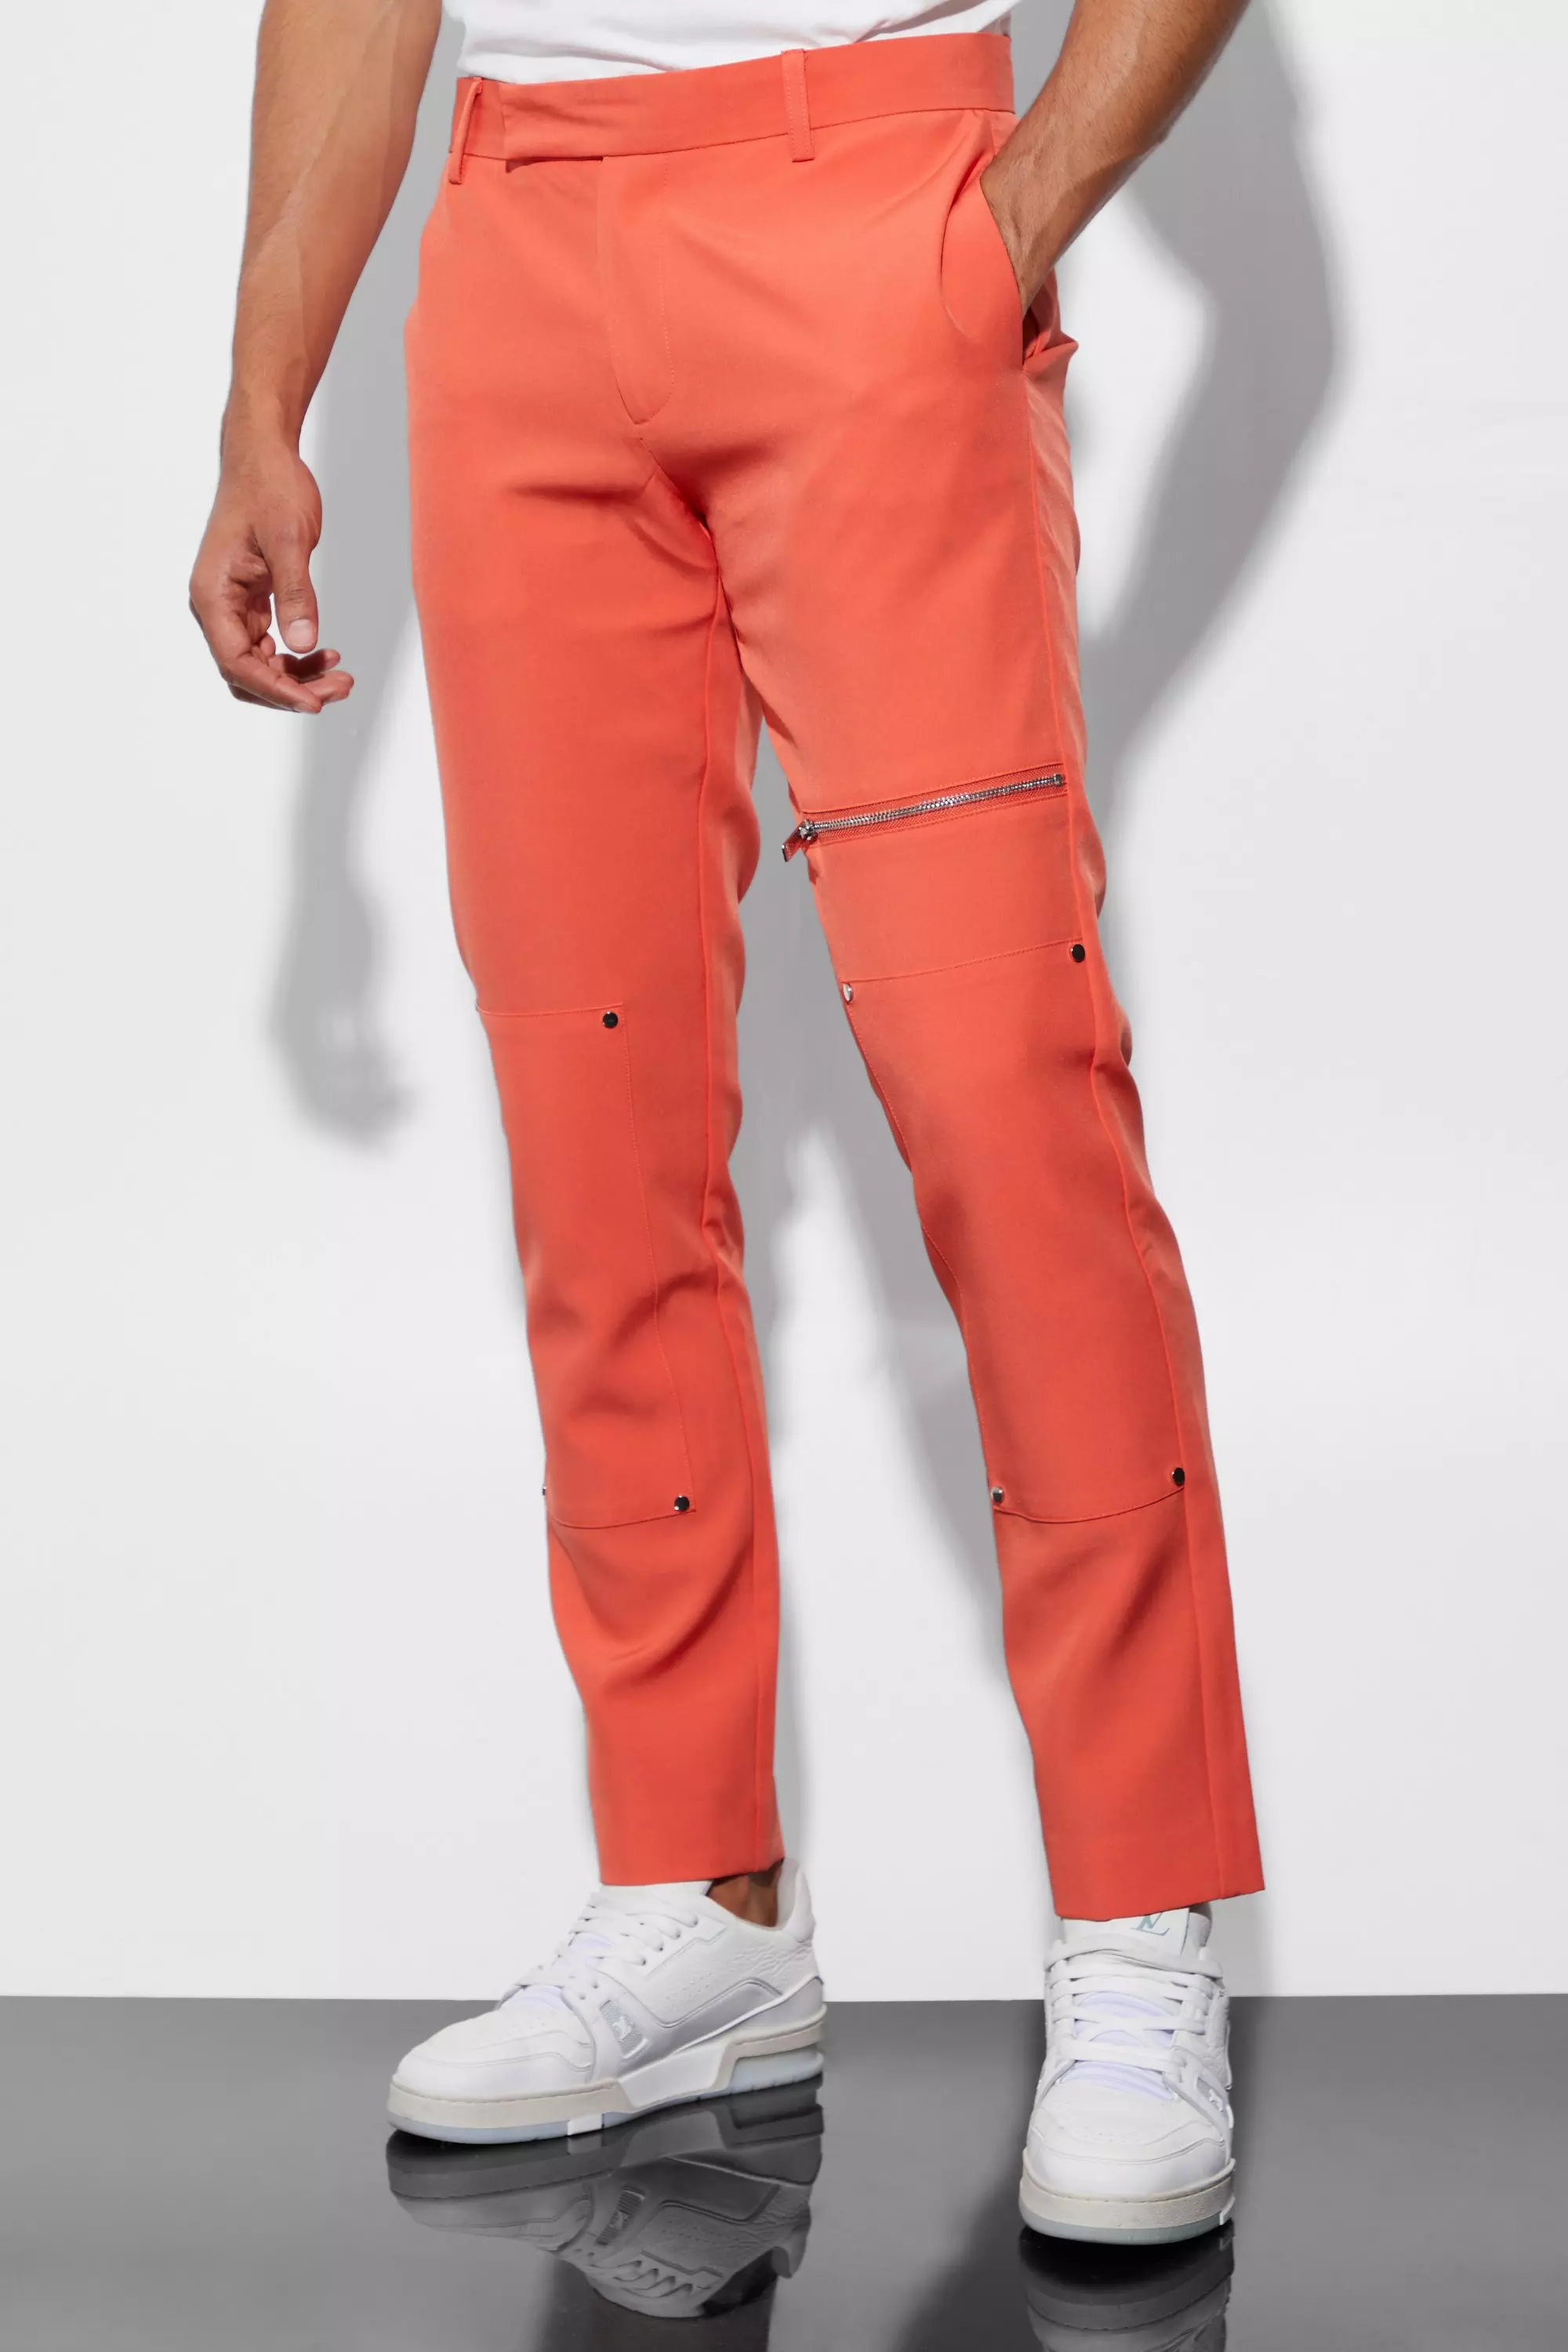 Men's Orange Pants